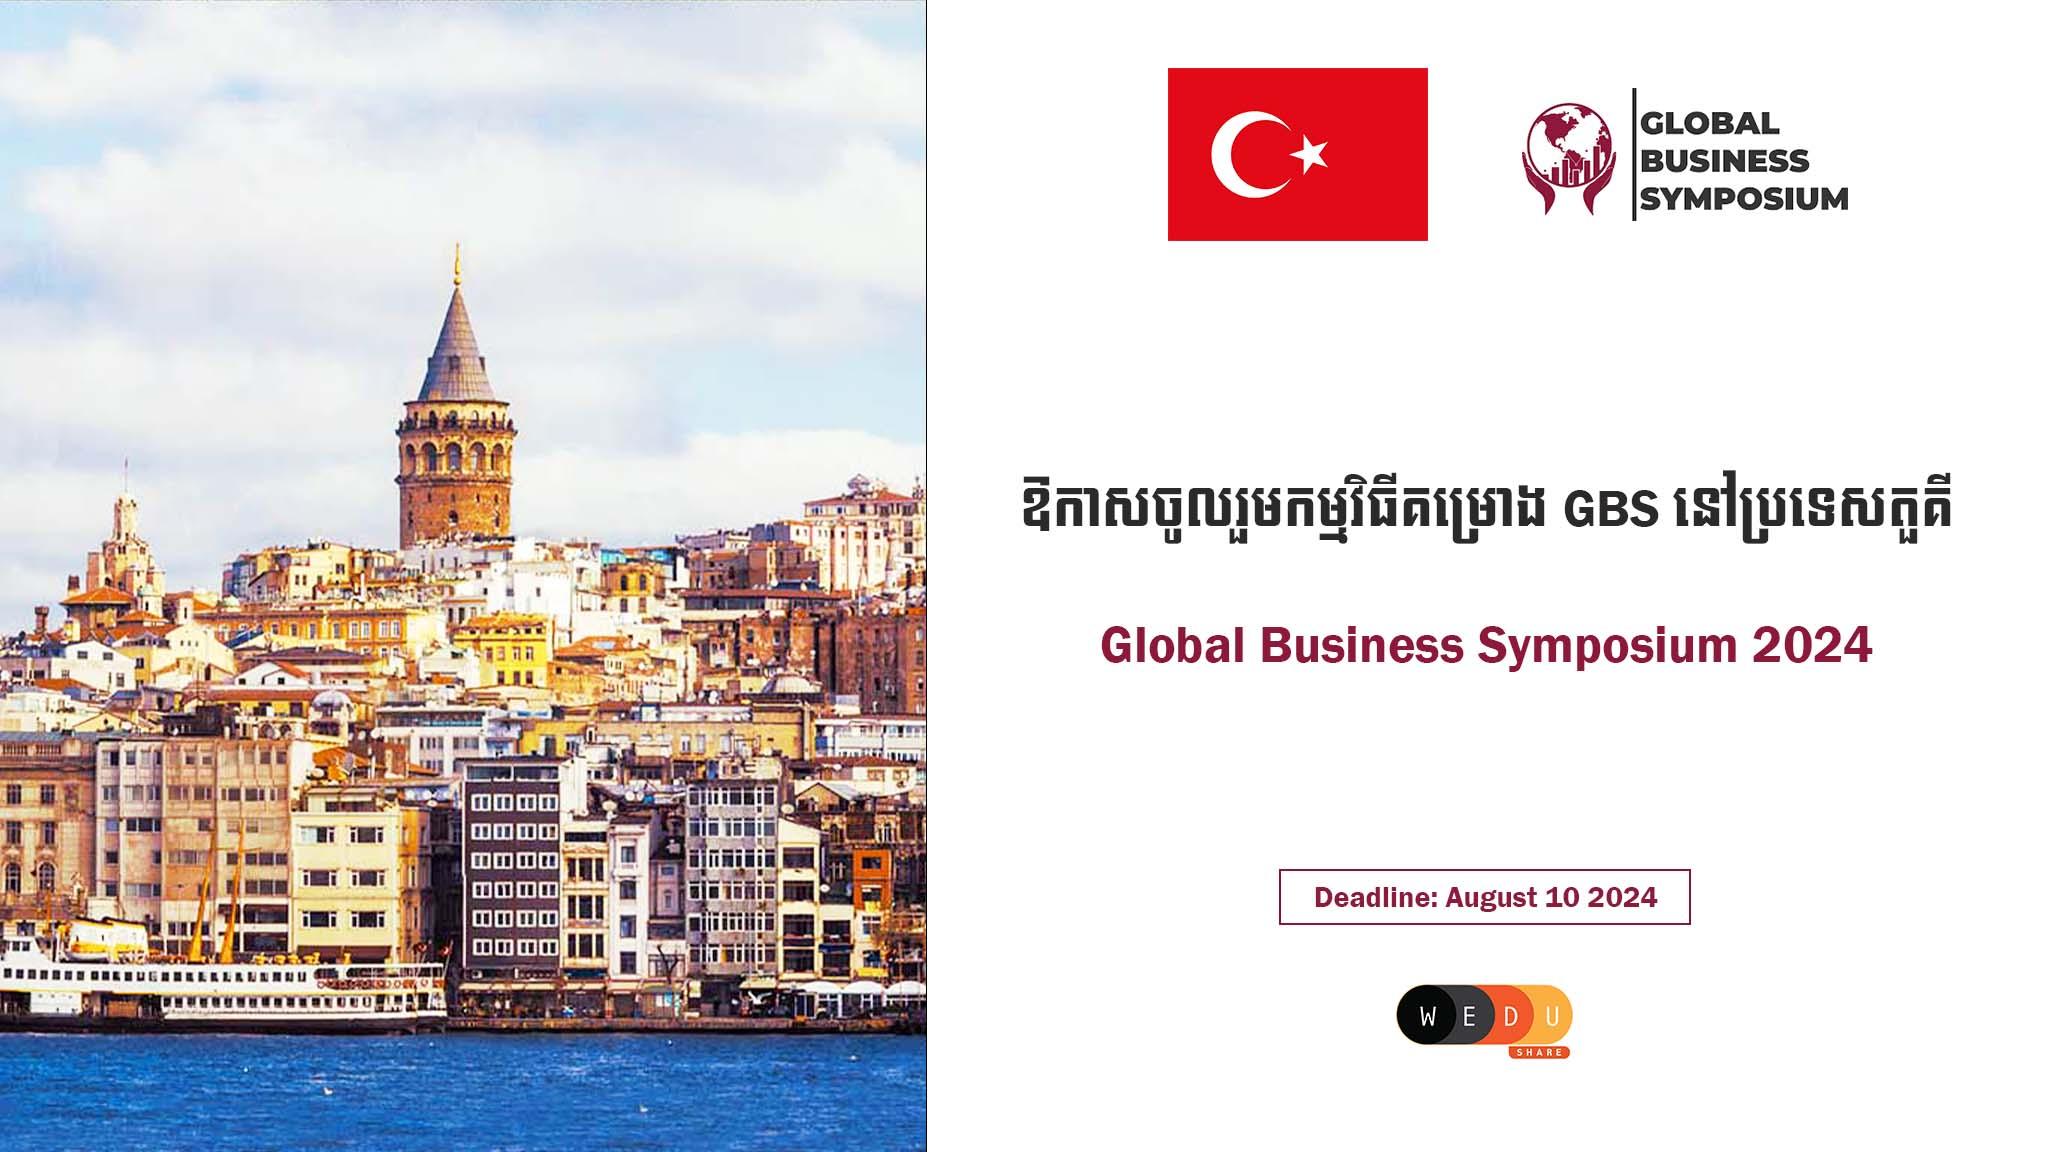 Global Business Symposium 2024